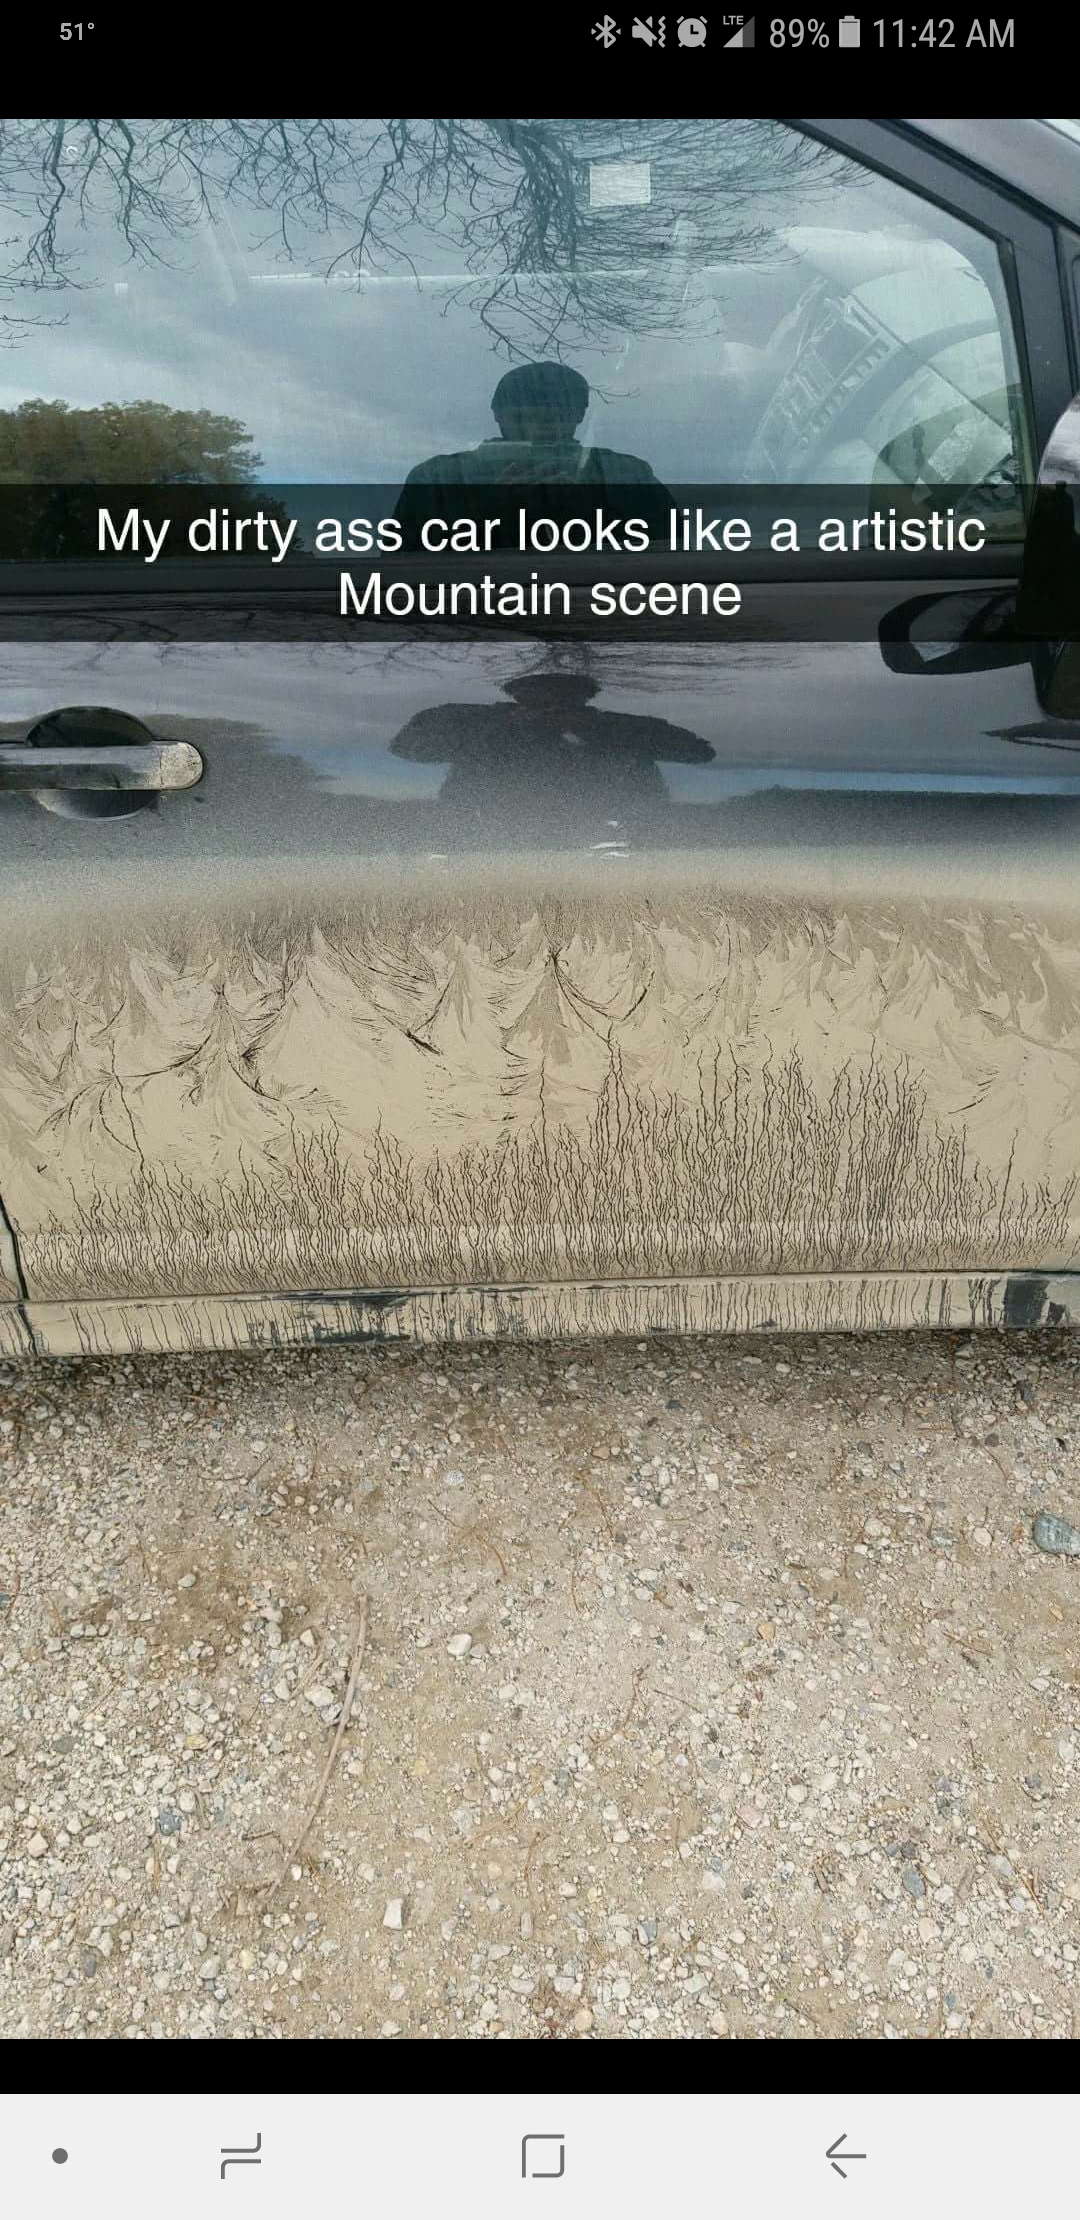 Artist - 89% My dirty ass car looks a artistic Mountain scene